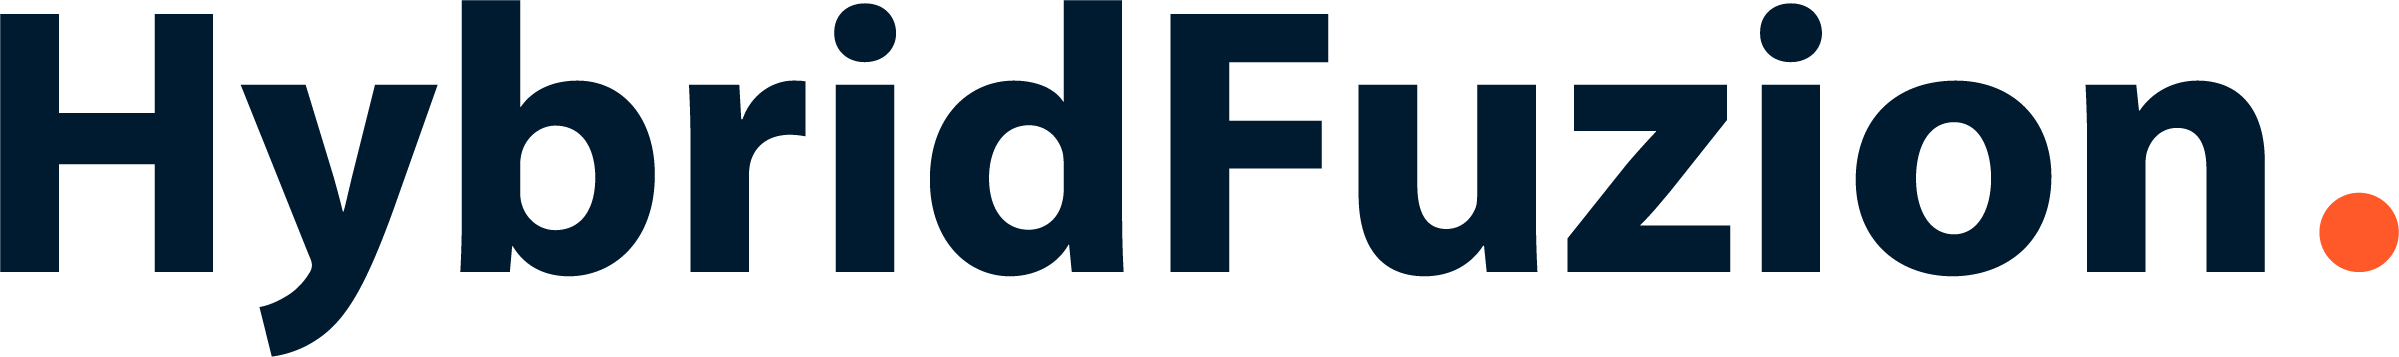 Hybrid Fuzion Logo